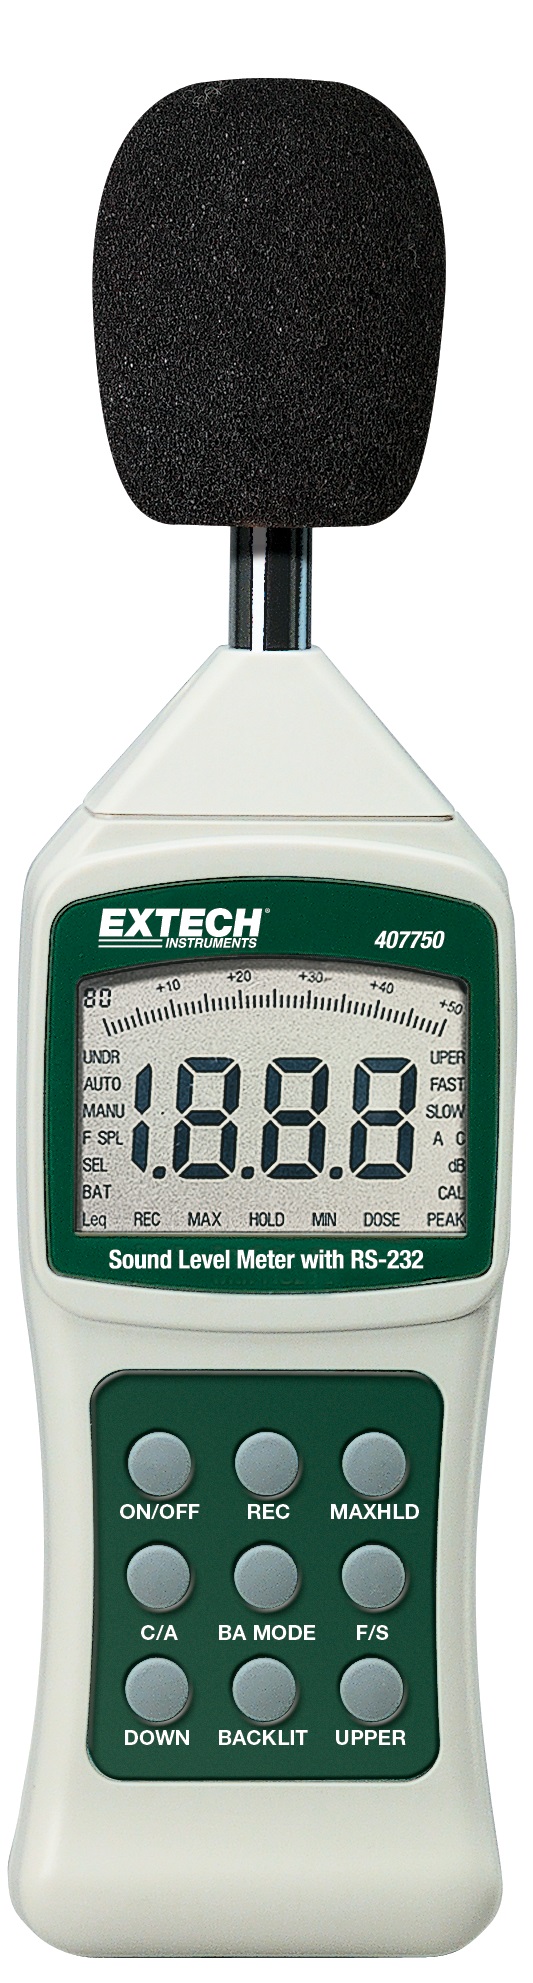 Extech 407750 Sound Level Meter